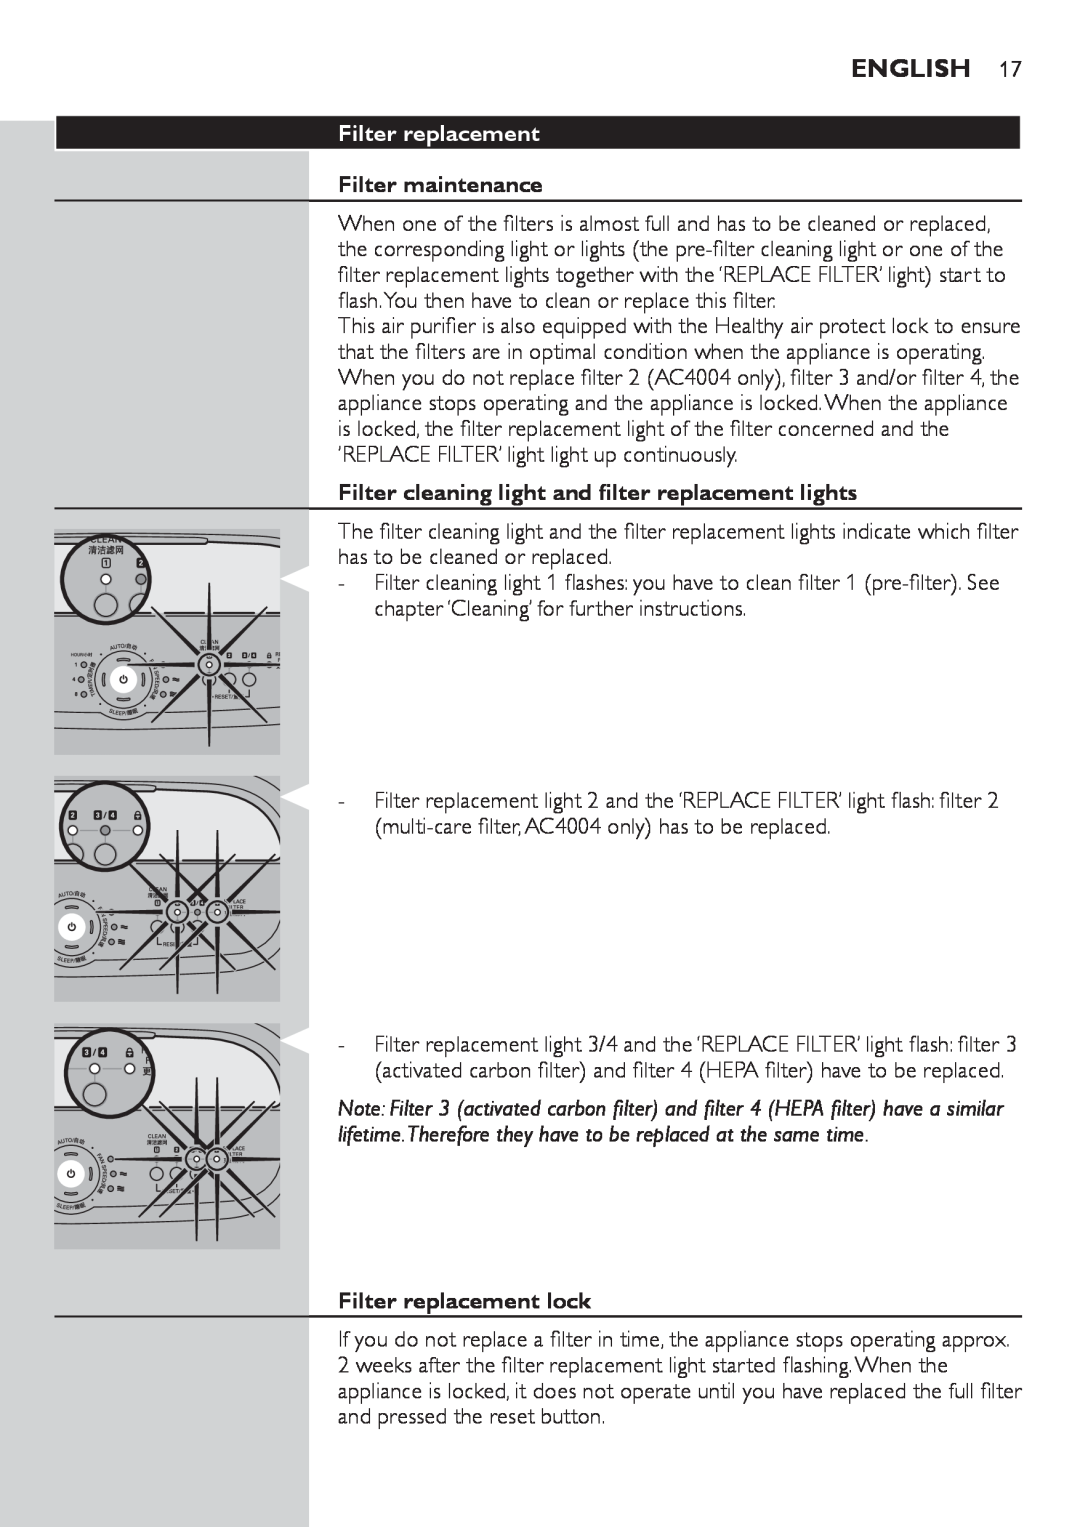 Philips AC4004, AC4002 user manual Filter maintenance, Filter replacement lock, English 